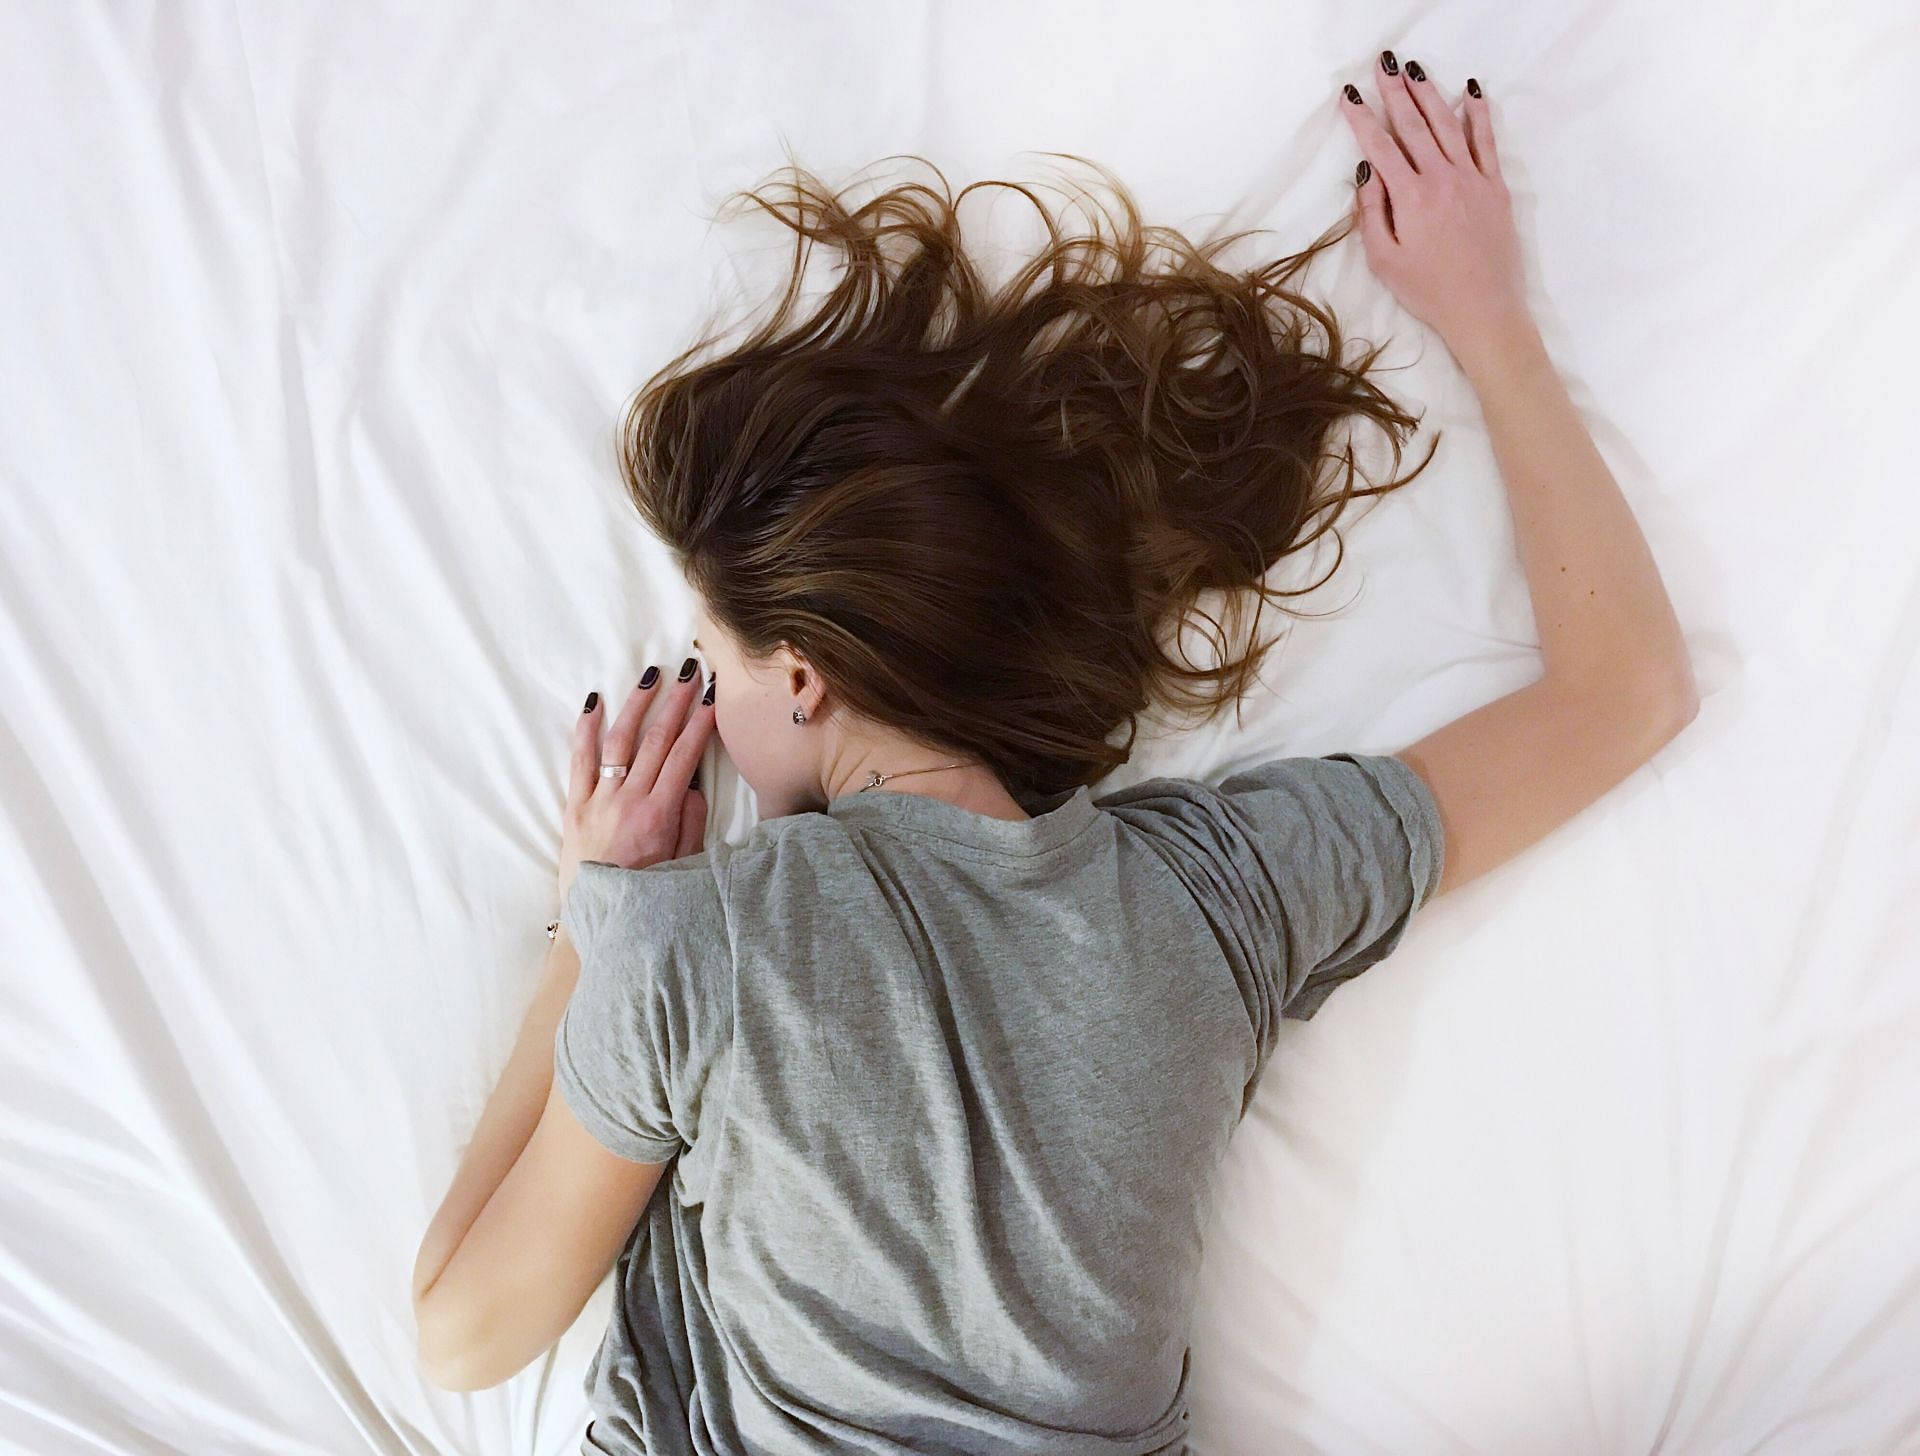 Sleeping on stomach can impact your health. (Image via Unsplash/ Vlasislav Muslakov)